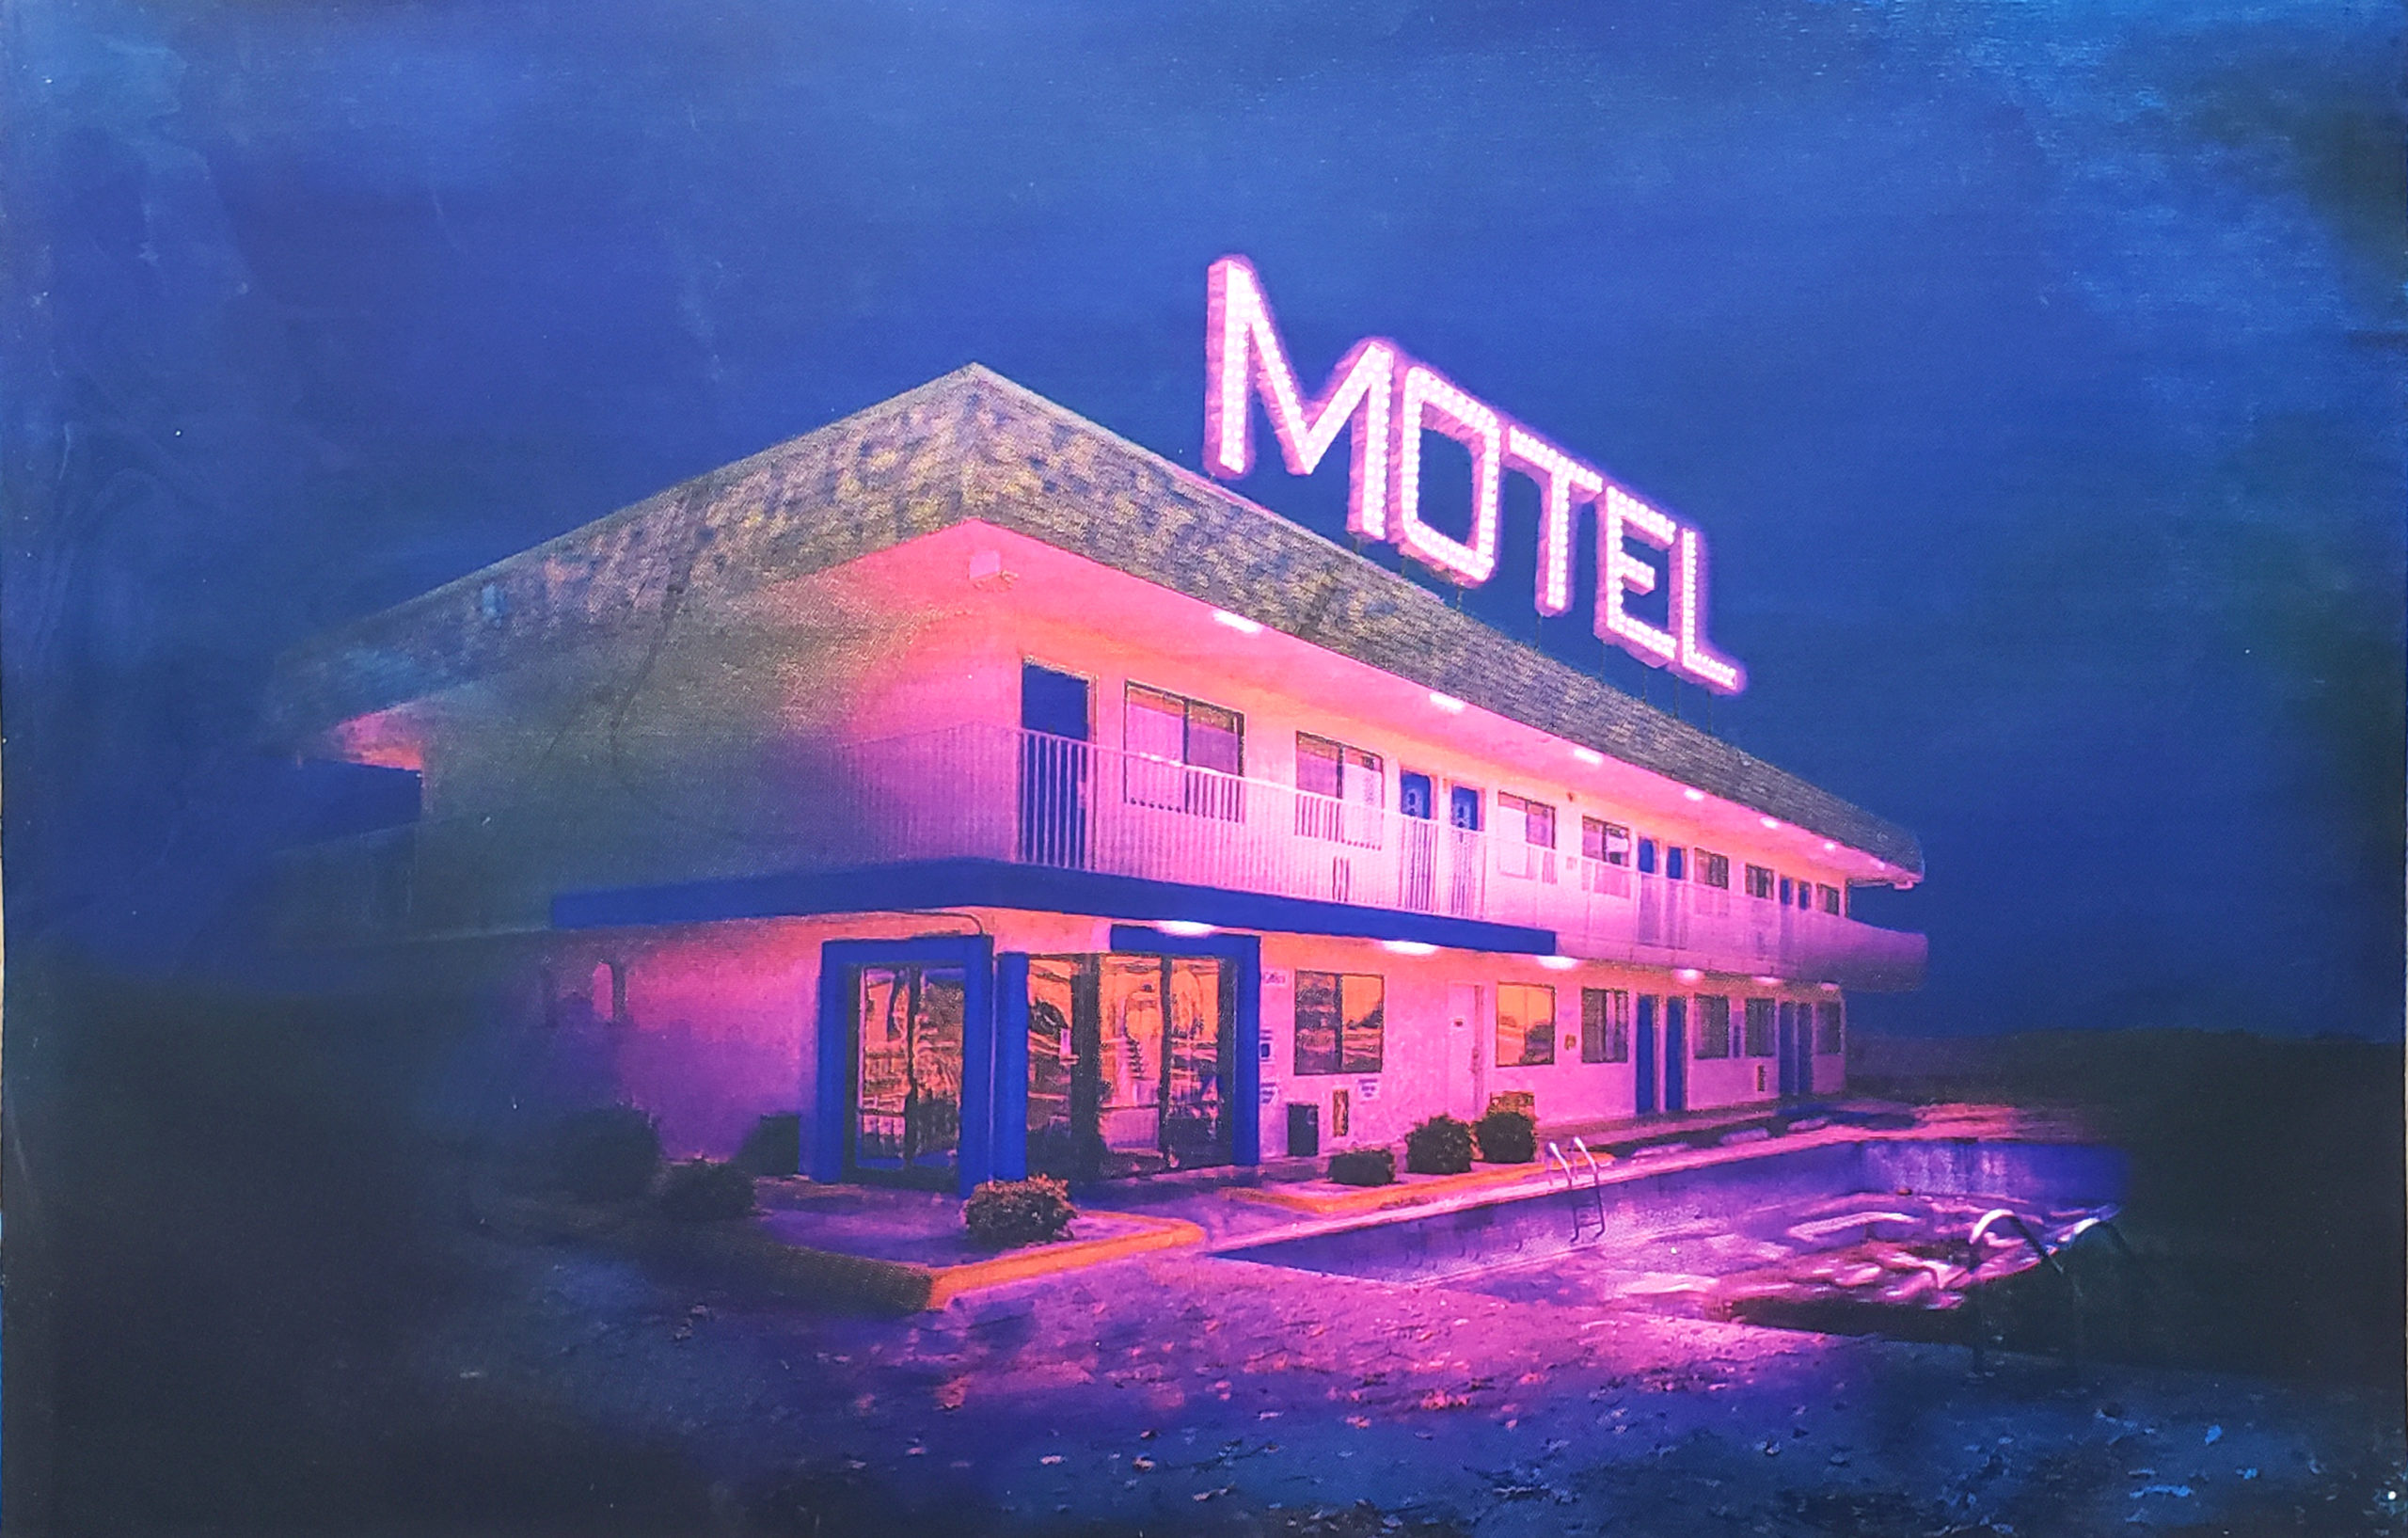 Grnad motel - Julie Giraud